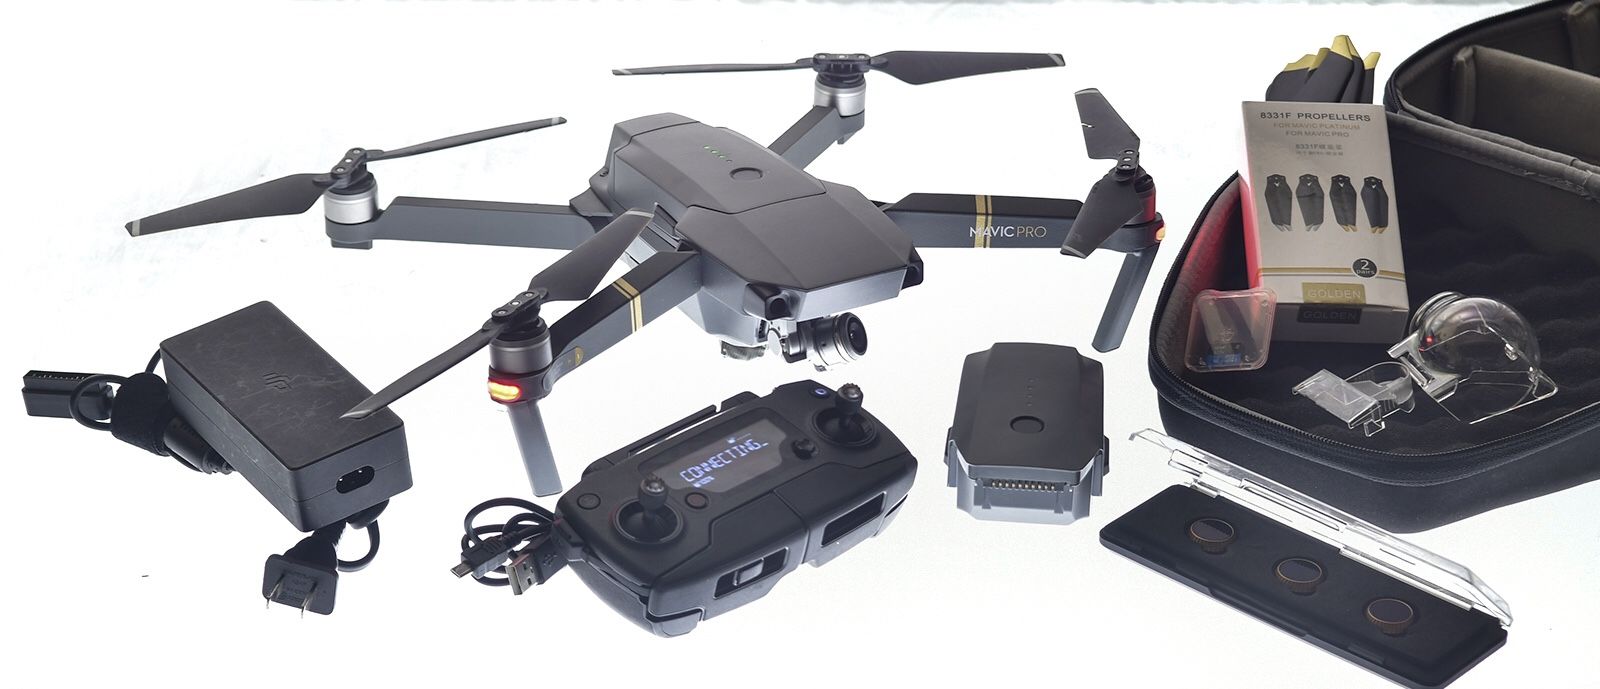 Drone -DJI Mavic pro. Advanced kit. 2 batteries. 3 polar pro filter kit 4,8 & 16. Memory card 16 Gb. All cords and protective covers.